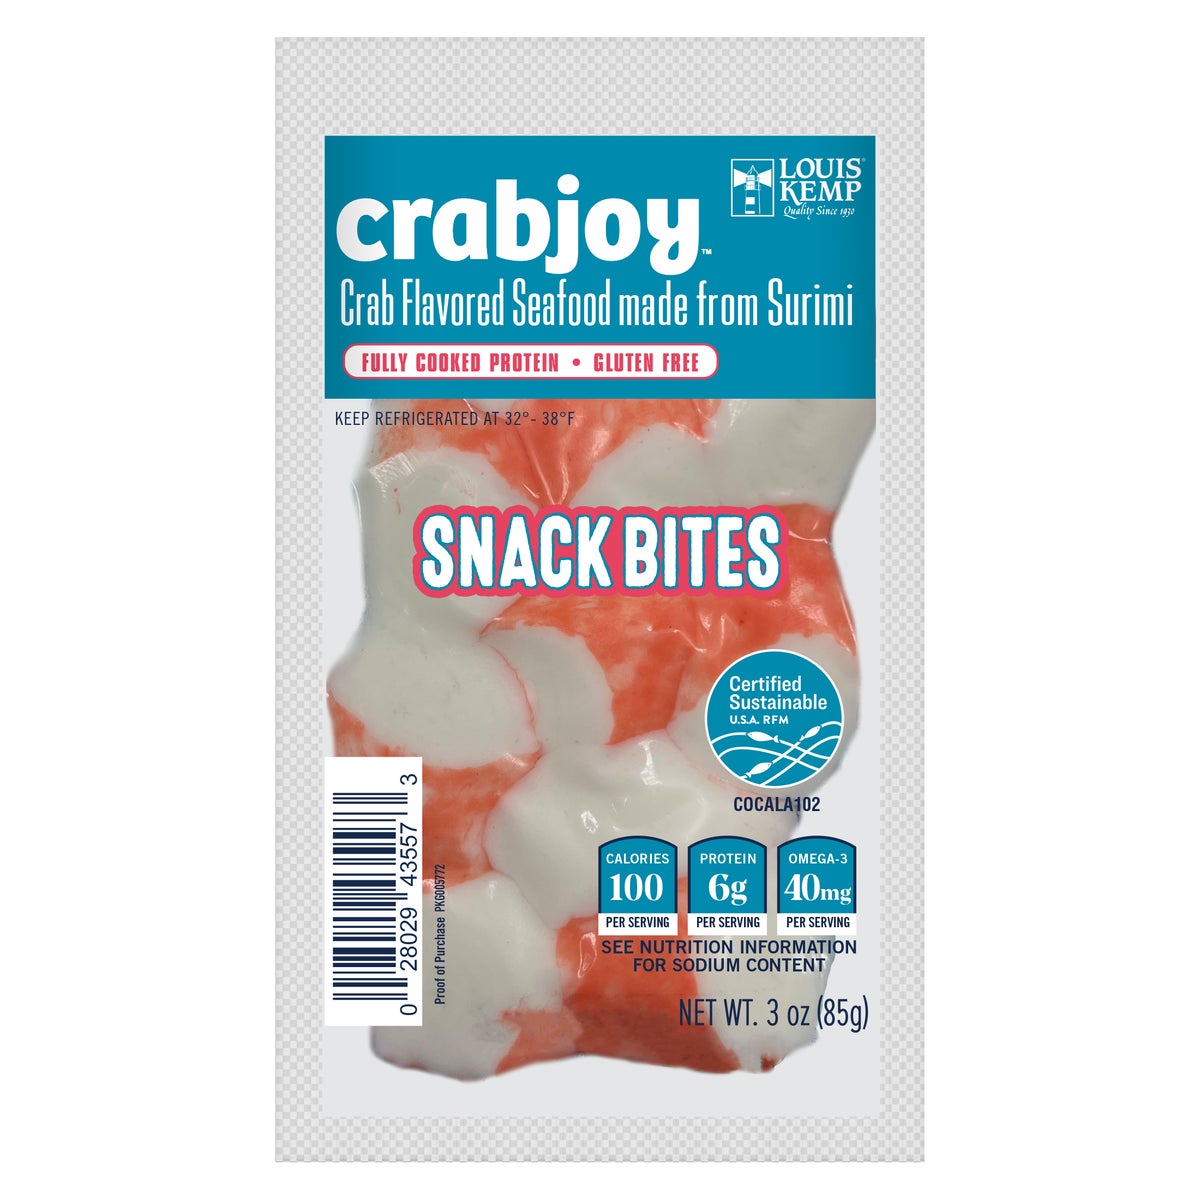 Crabjoy Snack Bites